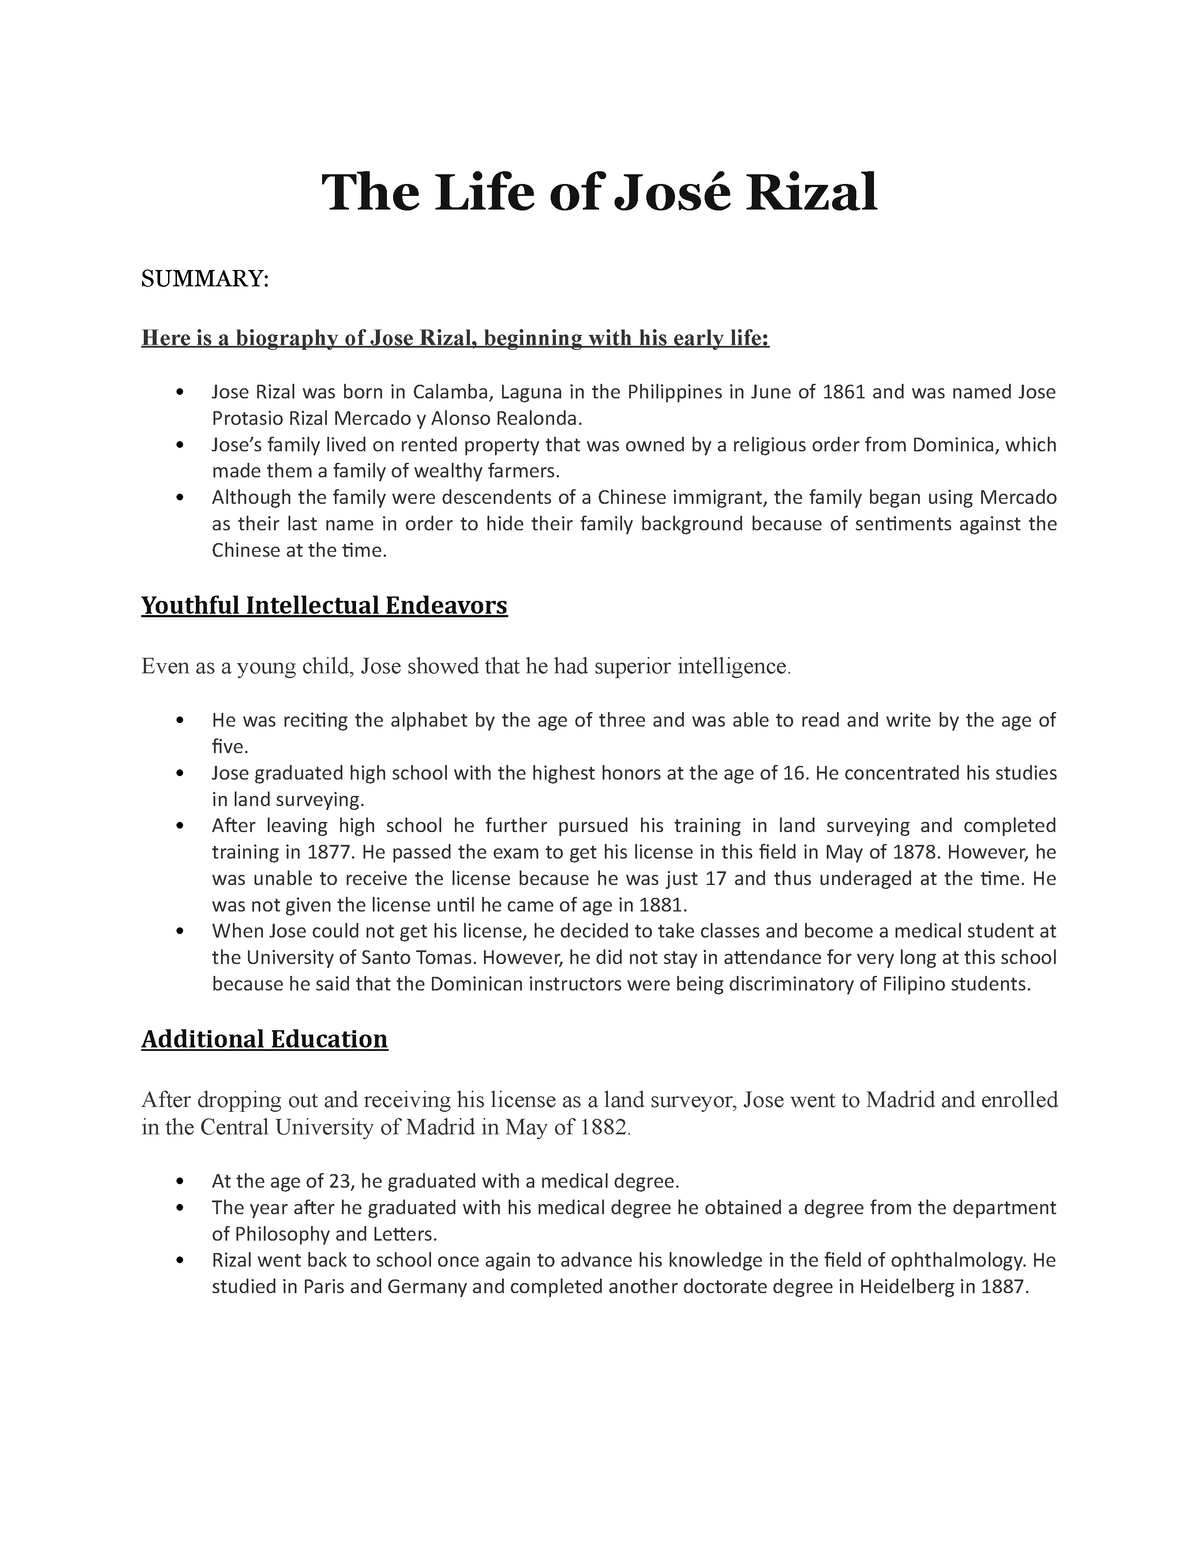 The Life of José Rizal - The Life of José Rizal SUMMARY: Here is a  biography of Jose Rizal, - Studocu